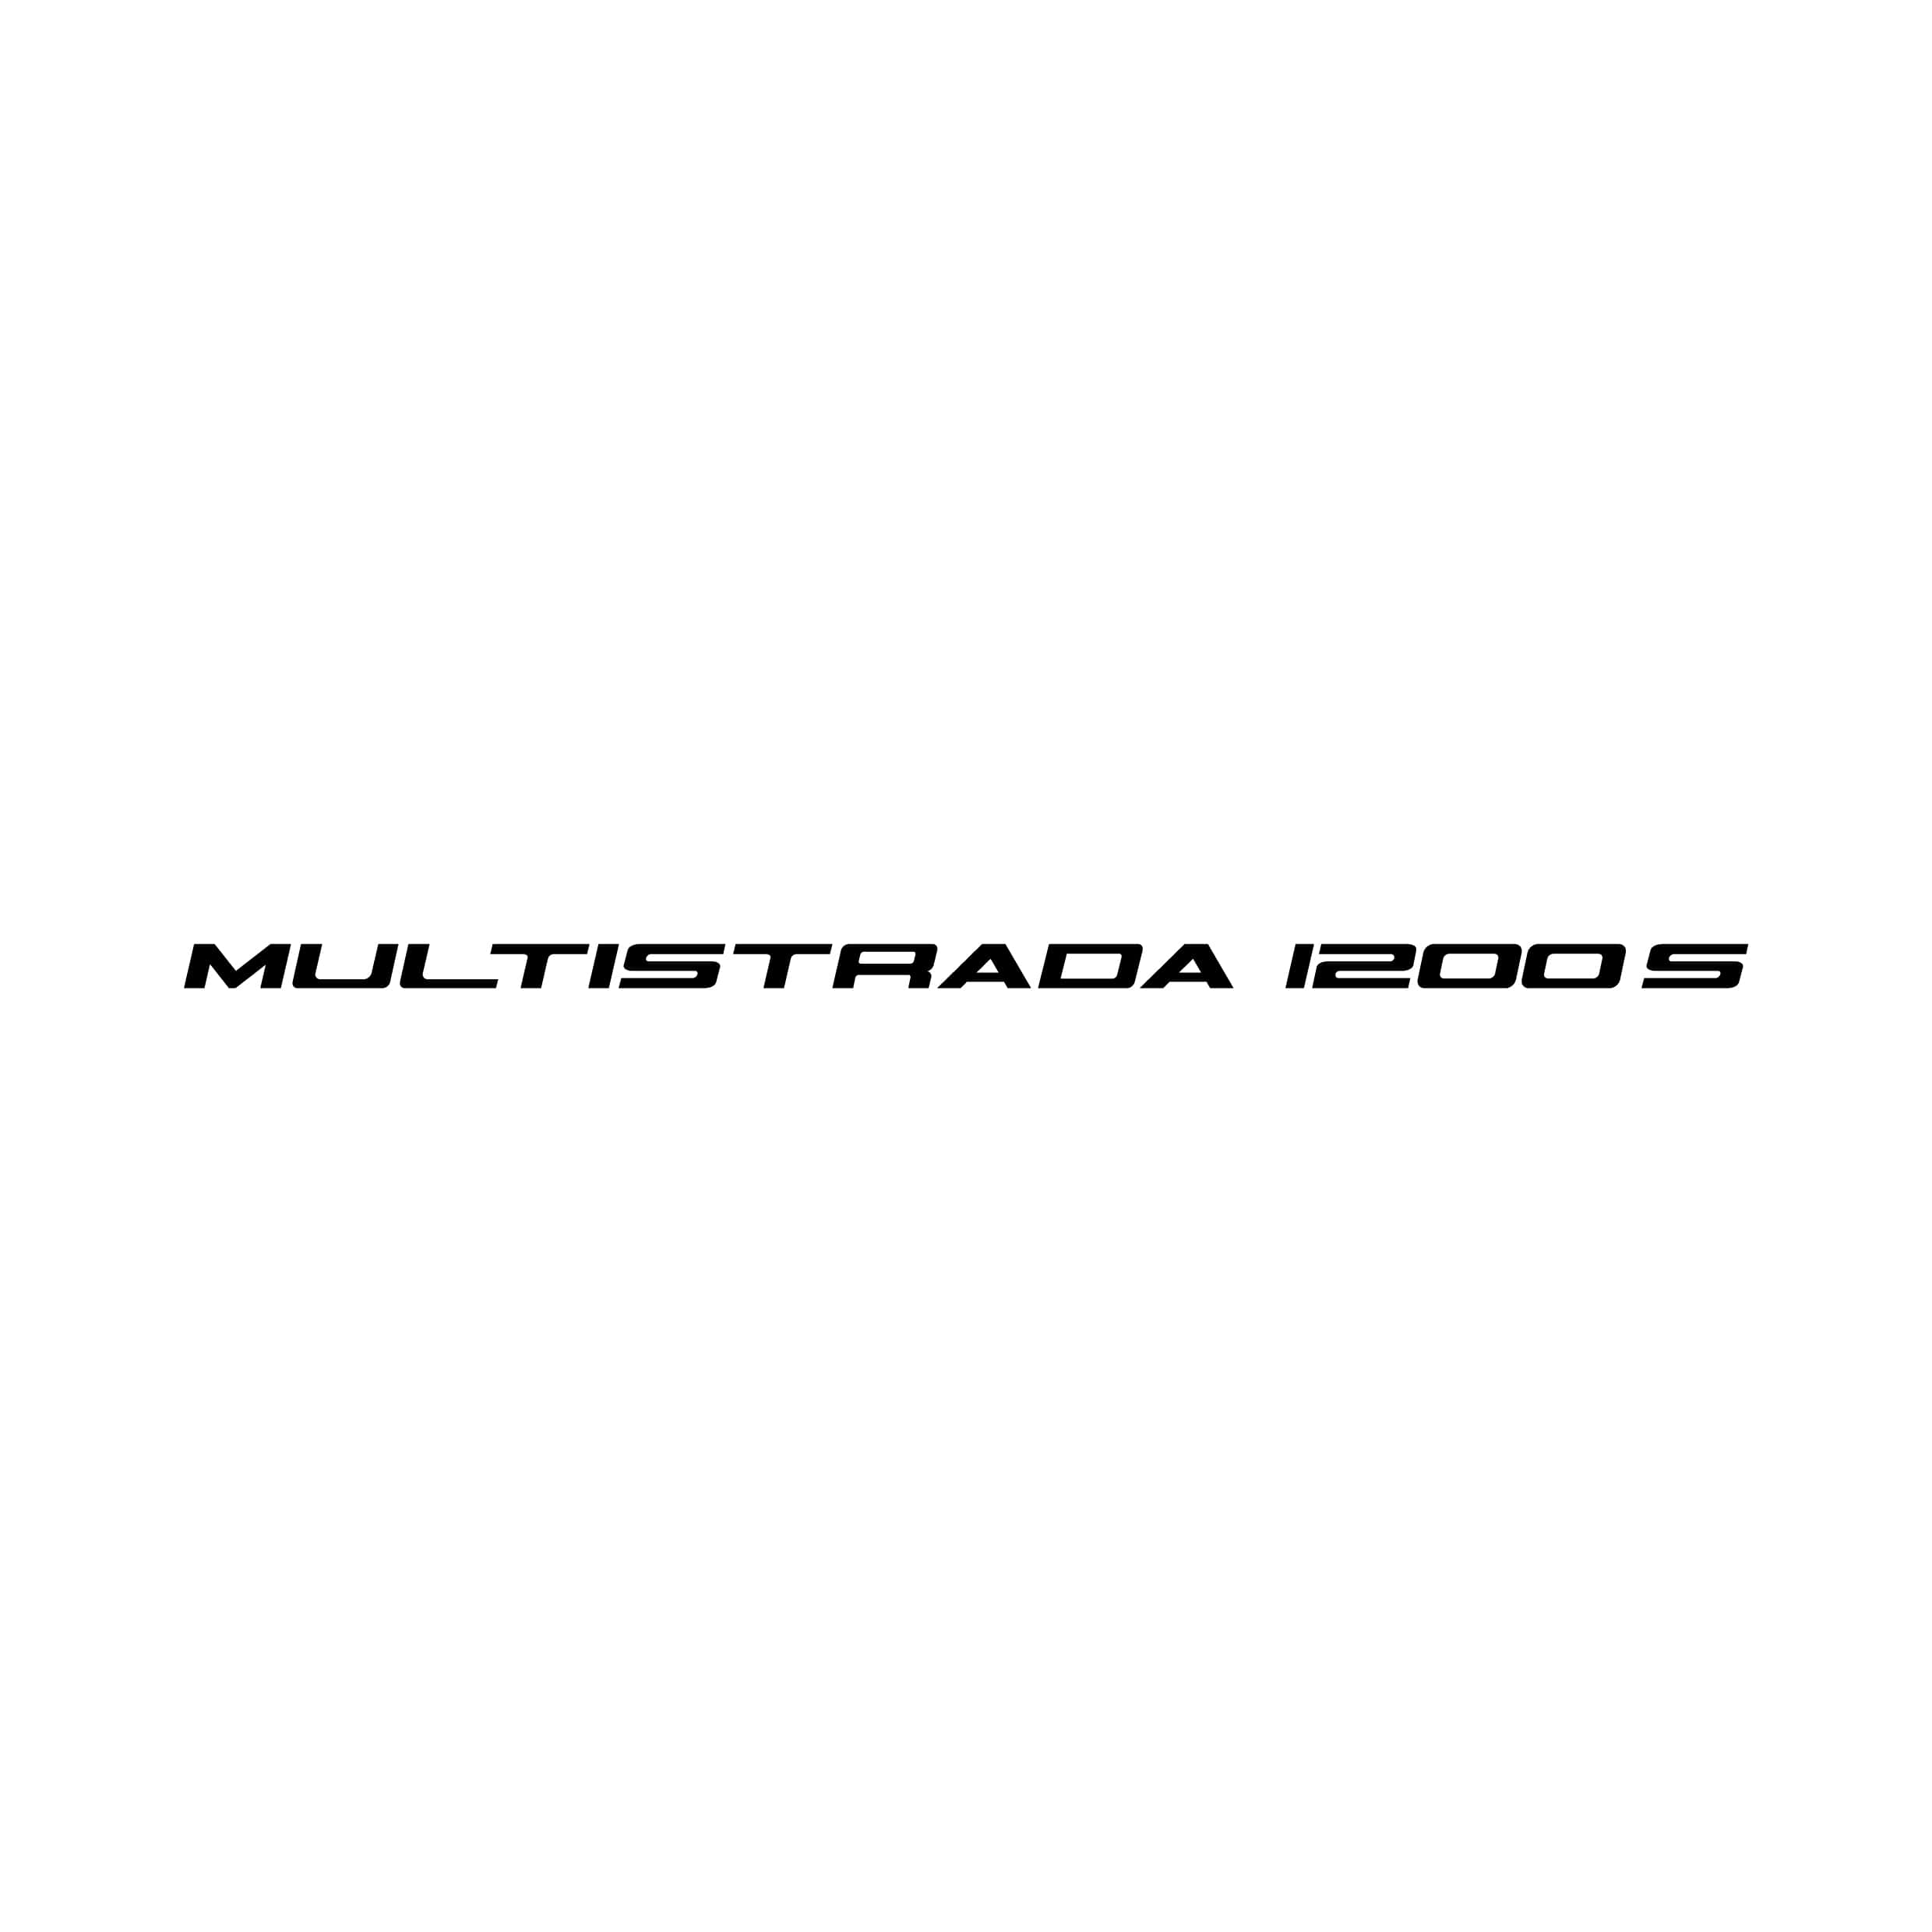 stickers-ducati-multistrada-1200s-ref19-autocollant-moto-sticker-deux-roue-autocollants-decals-sponsors-tuning-sport-logo-bike-scooter-min